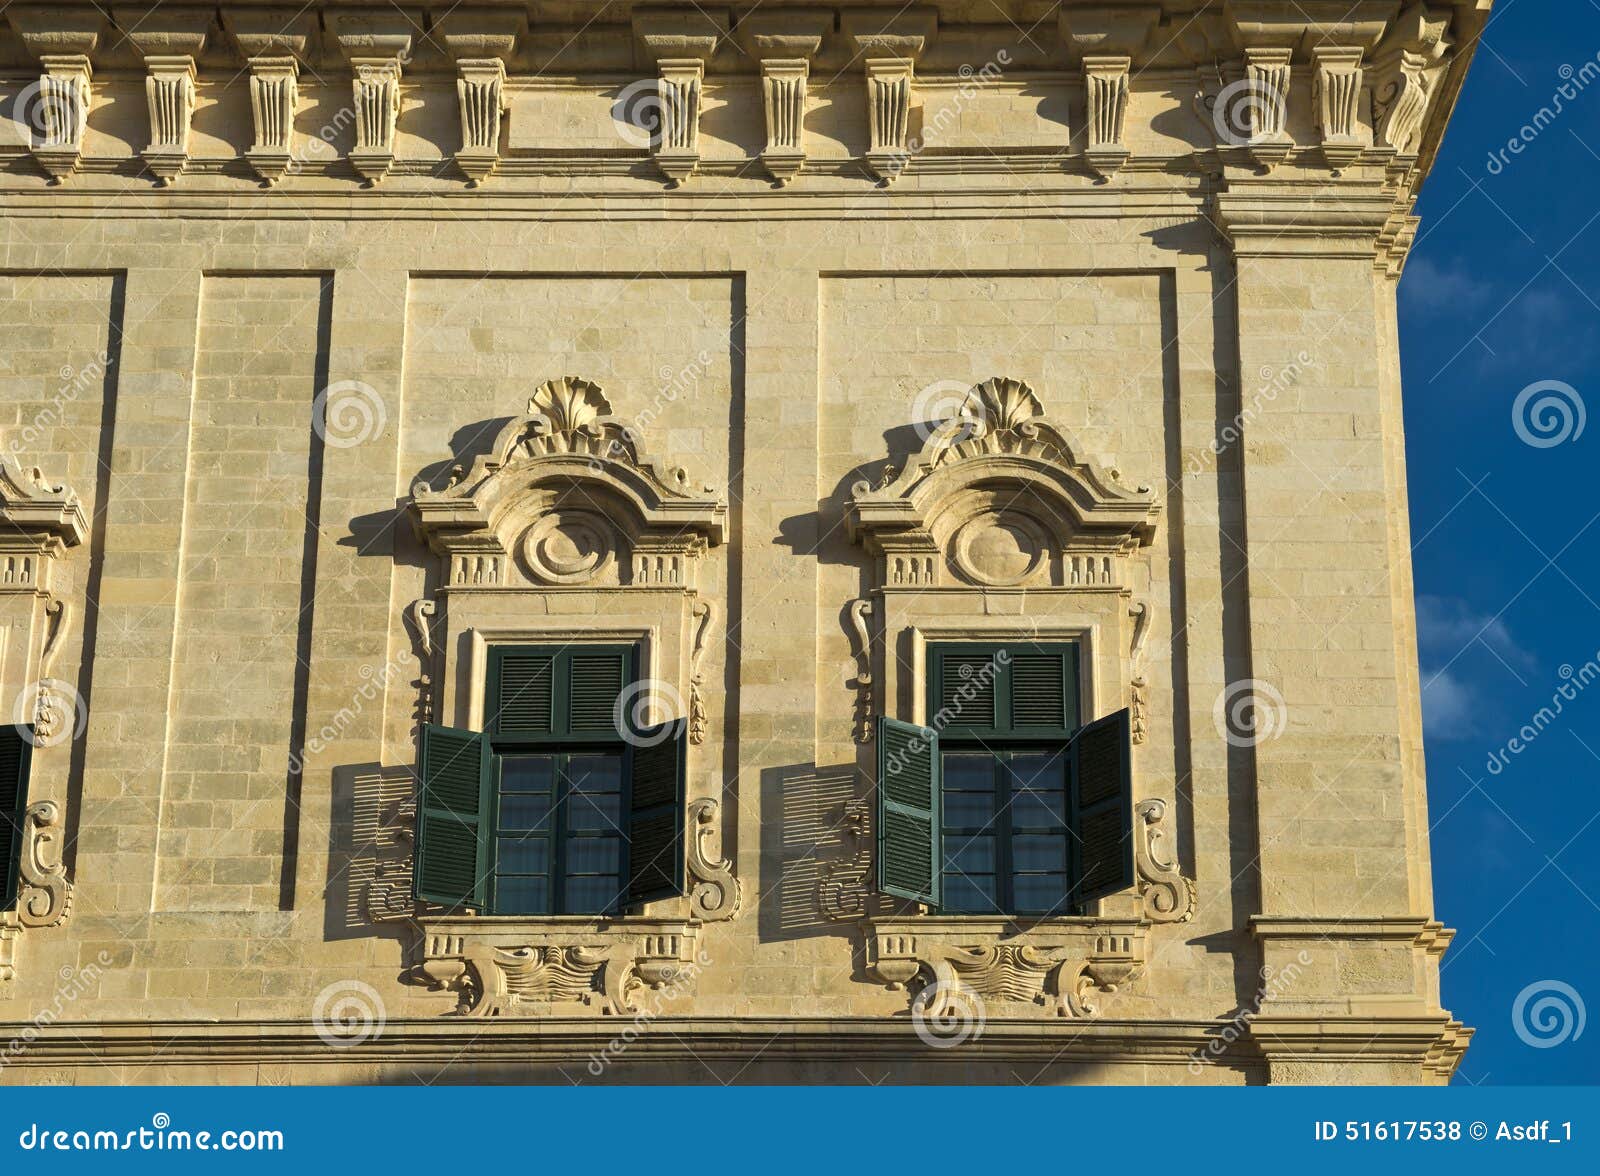 baroque facade of the auberge de castille, malat